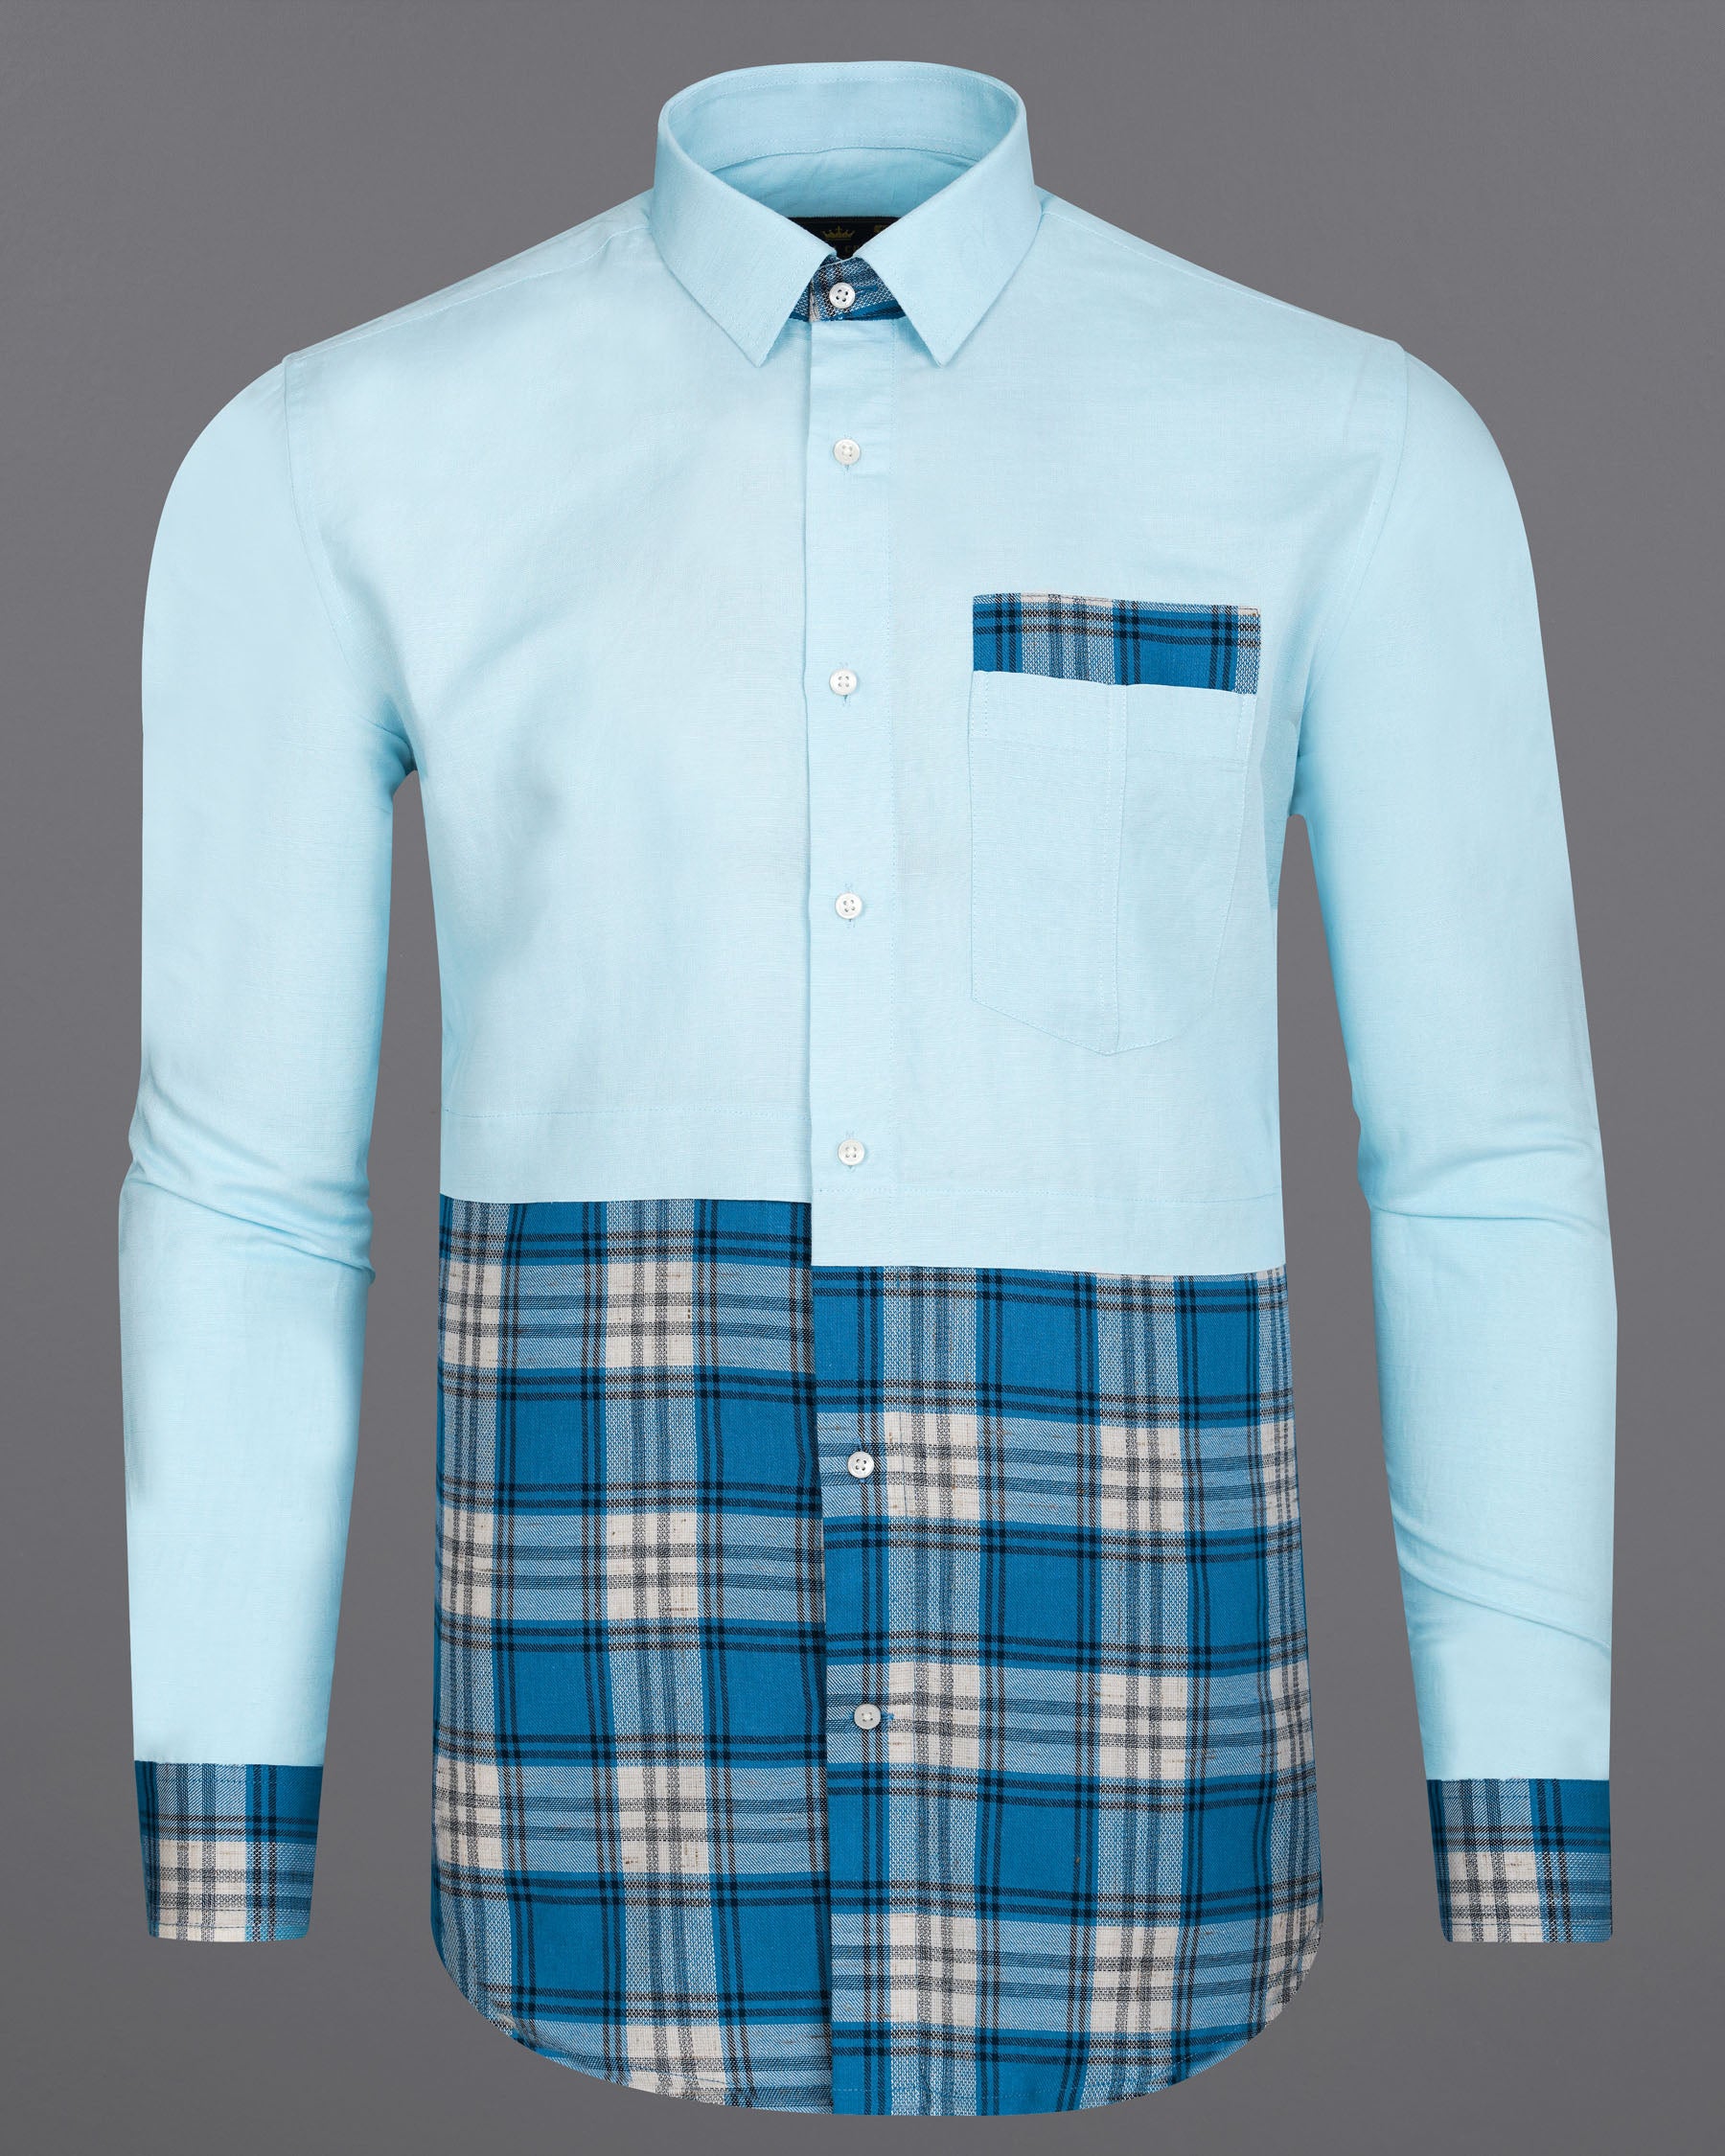 Botticelli Blue With Multi Colored Plaid Luxurious Linen Half and Half Designer Shirt 7812-P116-38, 7812-P116-39, 7812-P116-40, 7812-P116-42, 7812-P116-44, 7812-P116-46, 7812-P116-48, 7812-P116-50, 7812-P116-52